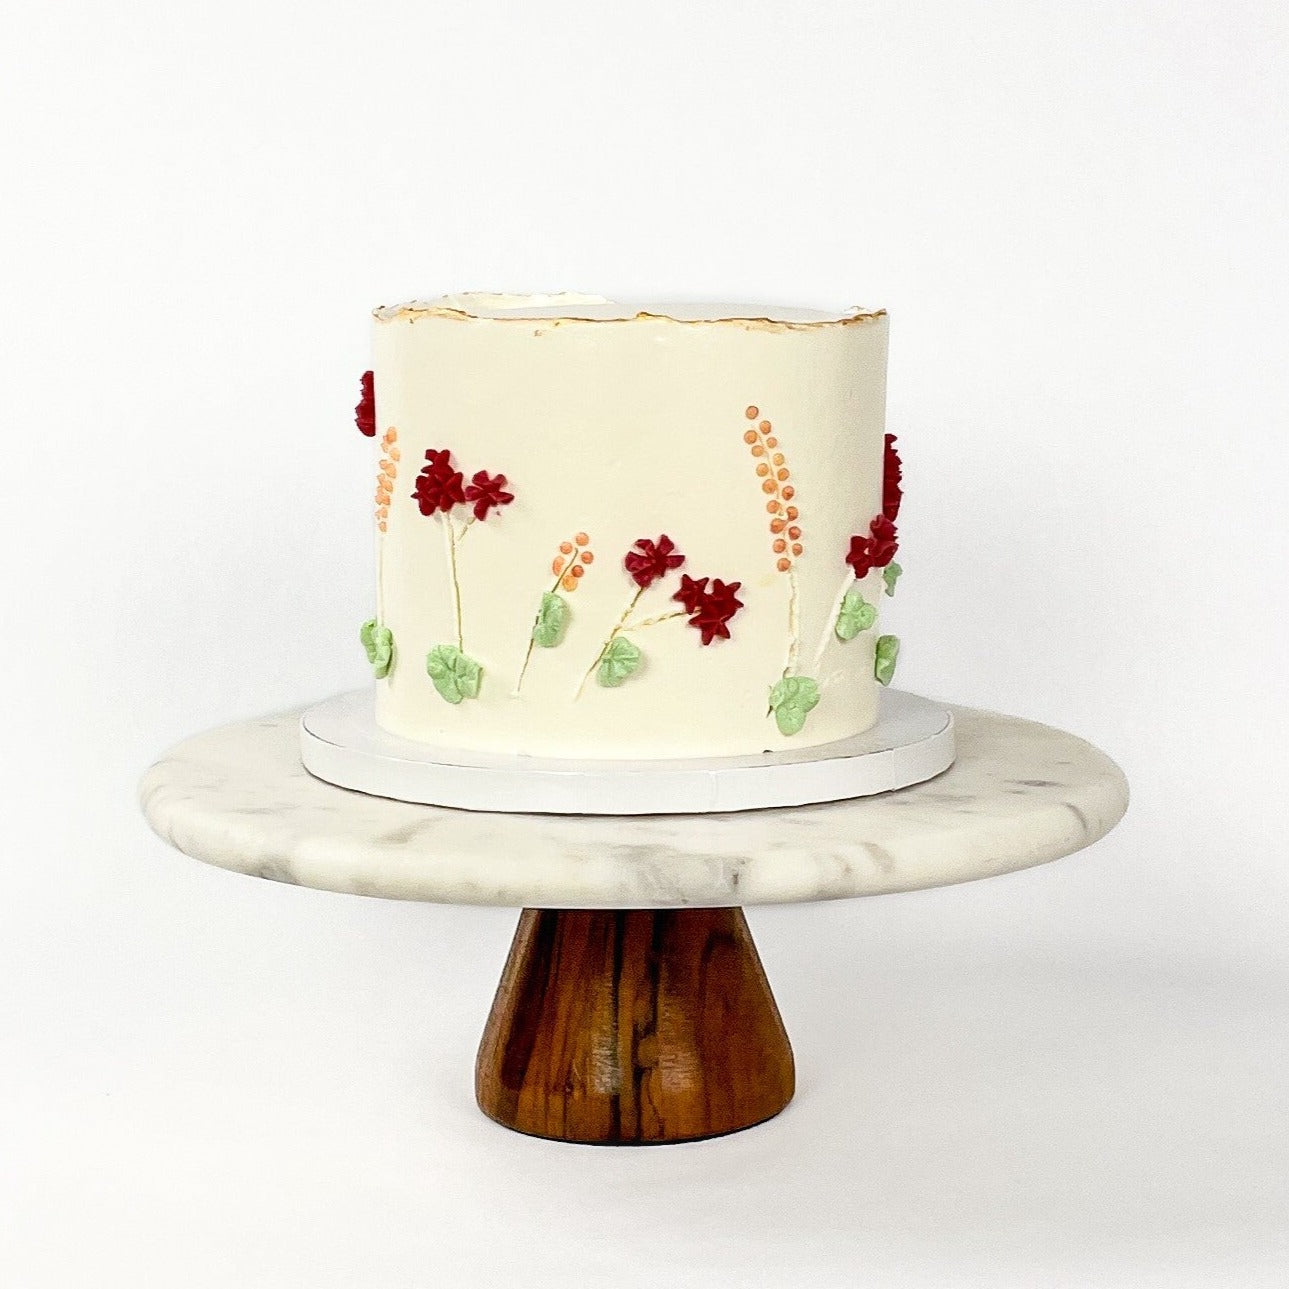 40th drip cake | 40th birthday cakes, 40th cake, 40th birthday cake for  women